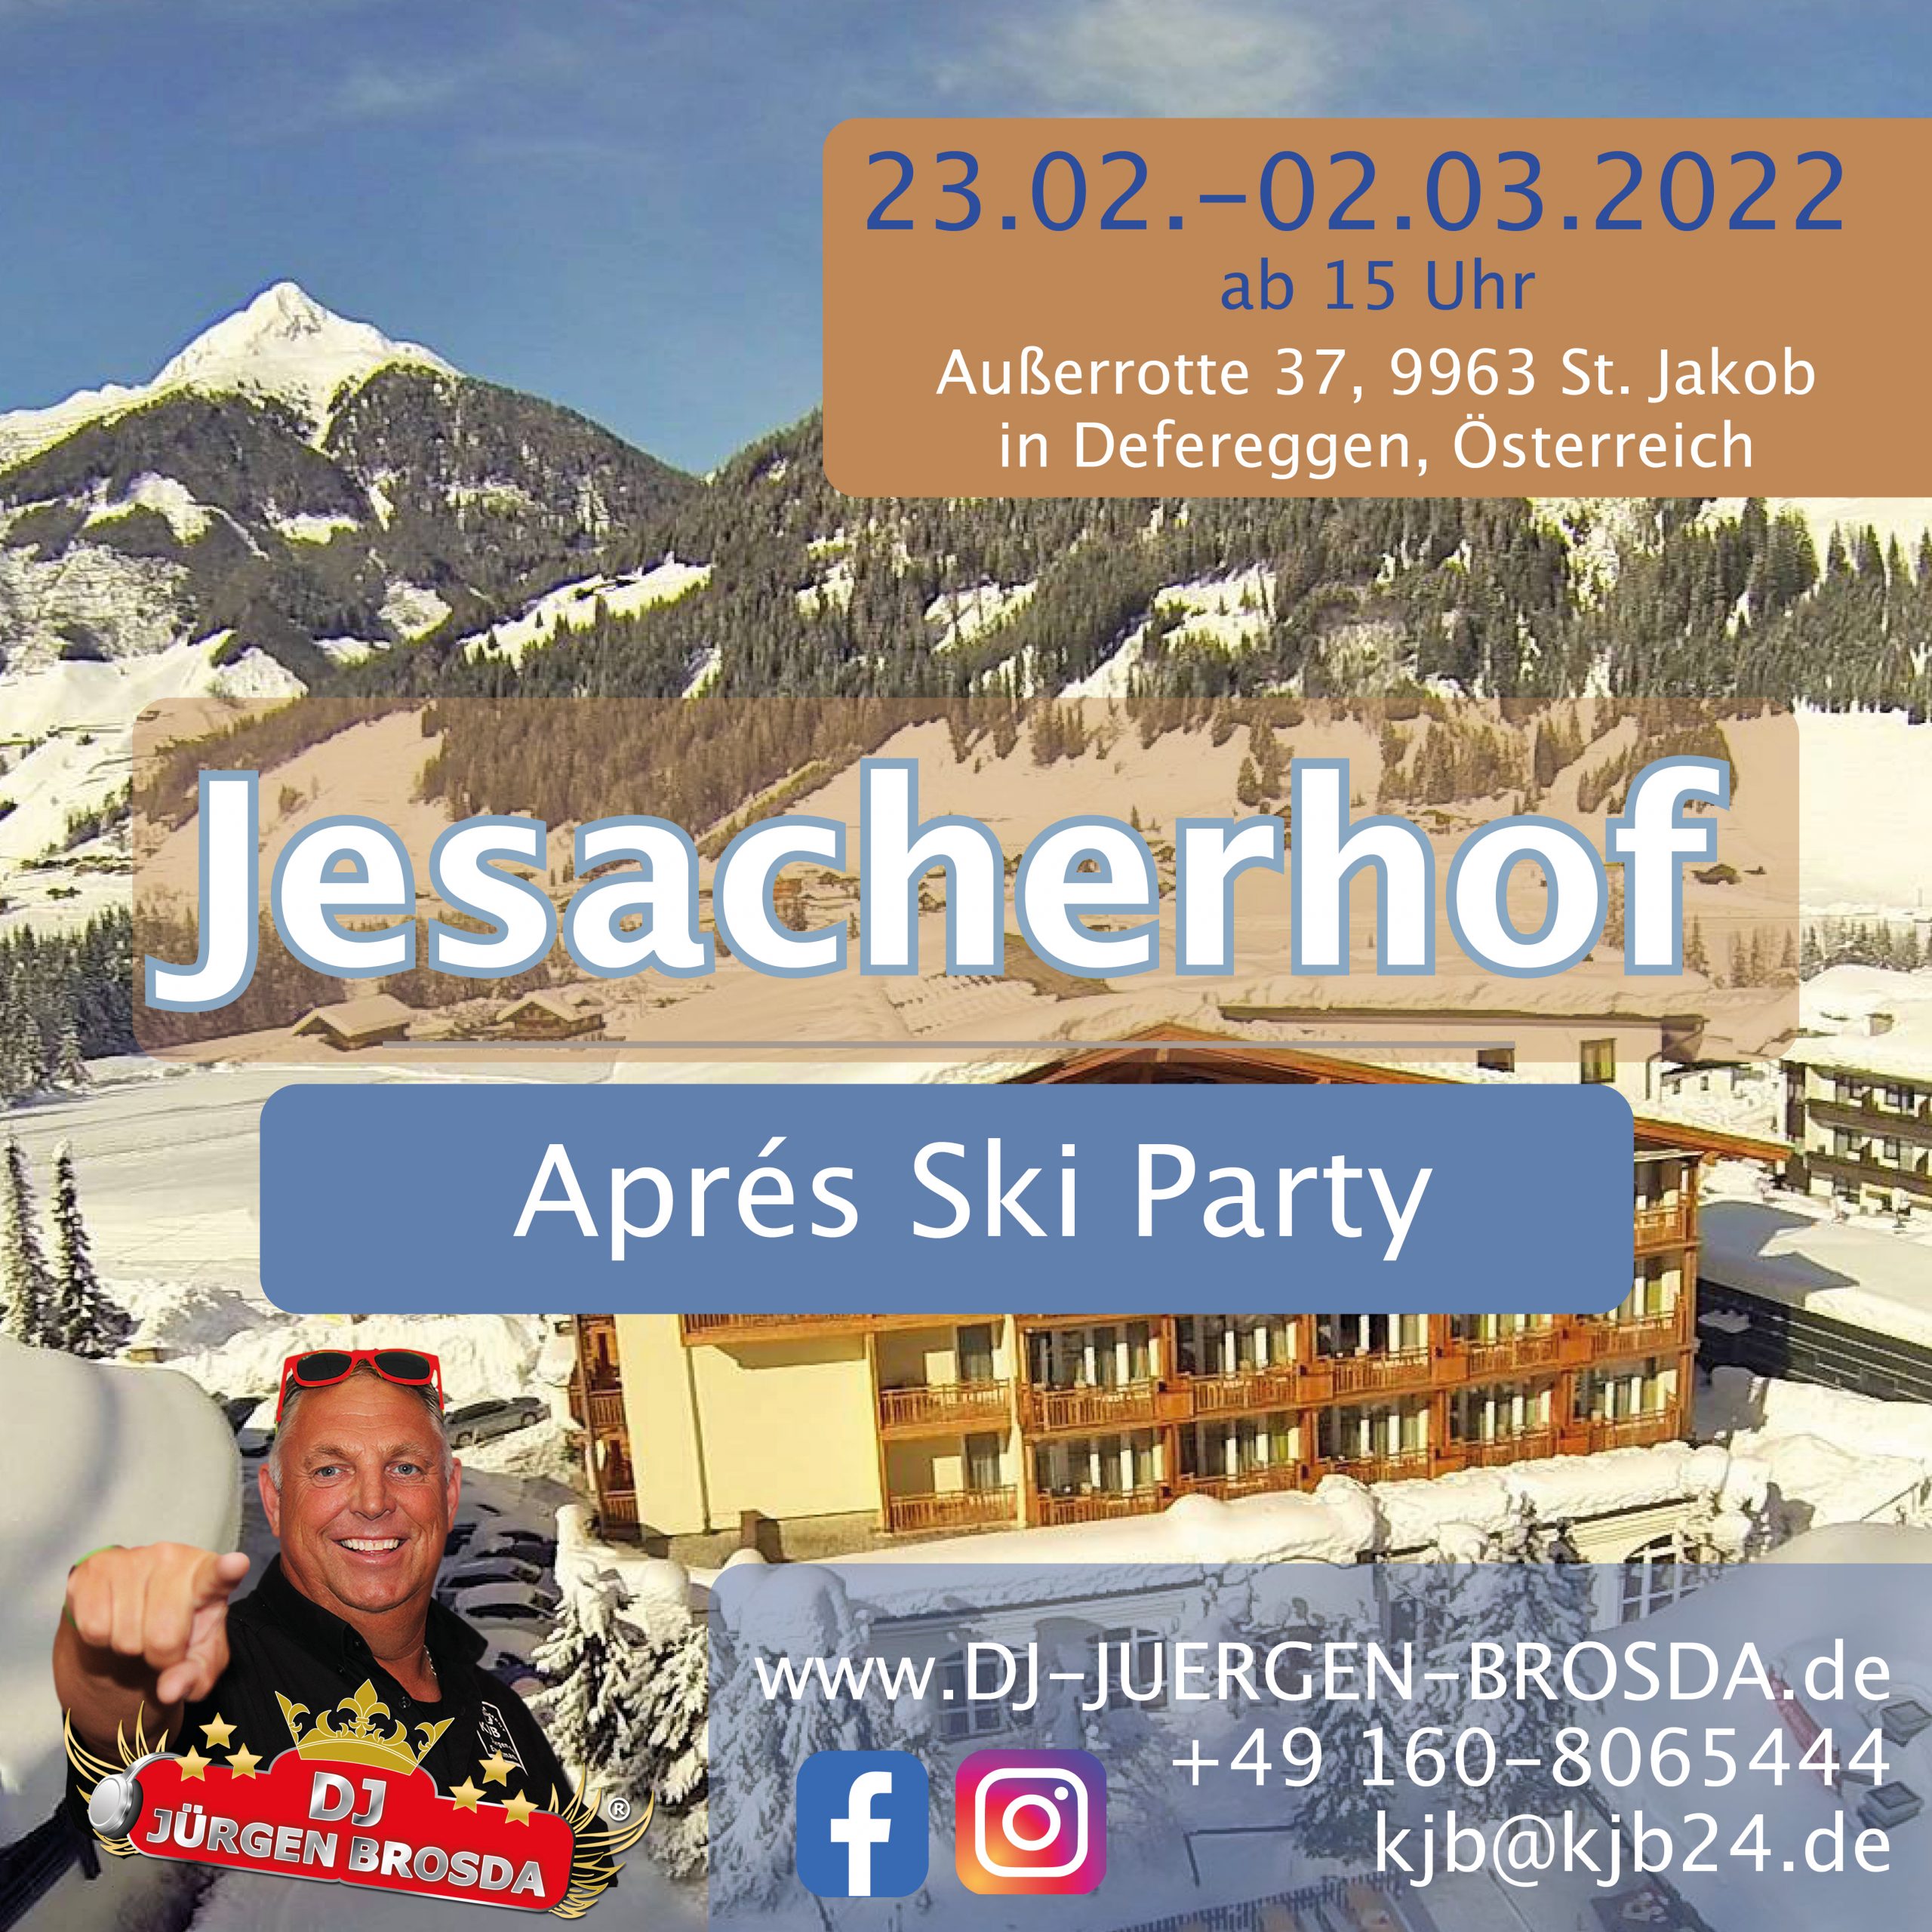 Apres Ski im Jesacher Hof mit DJ Jürgen Brosda